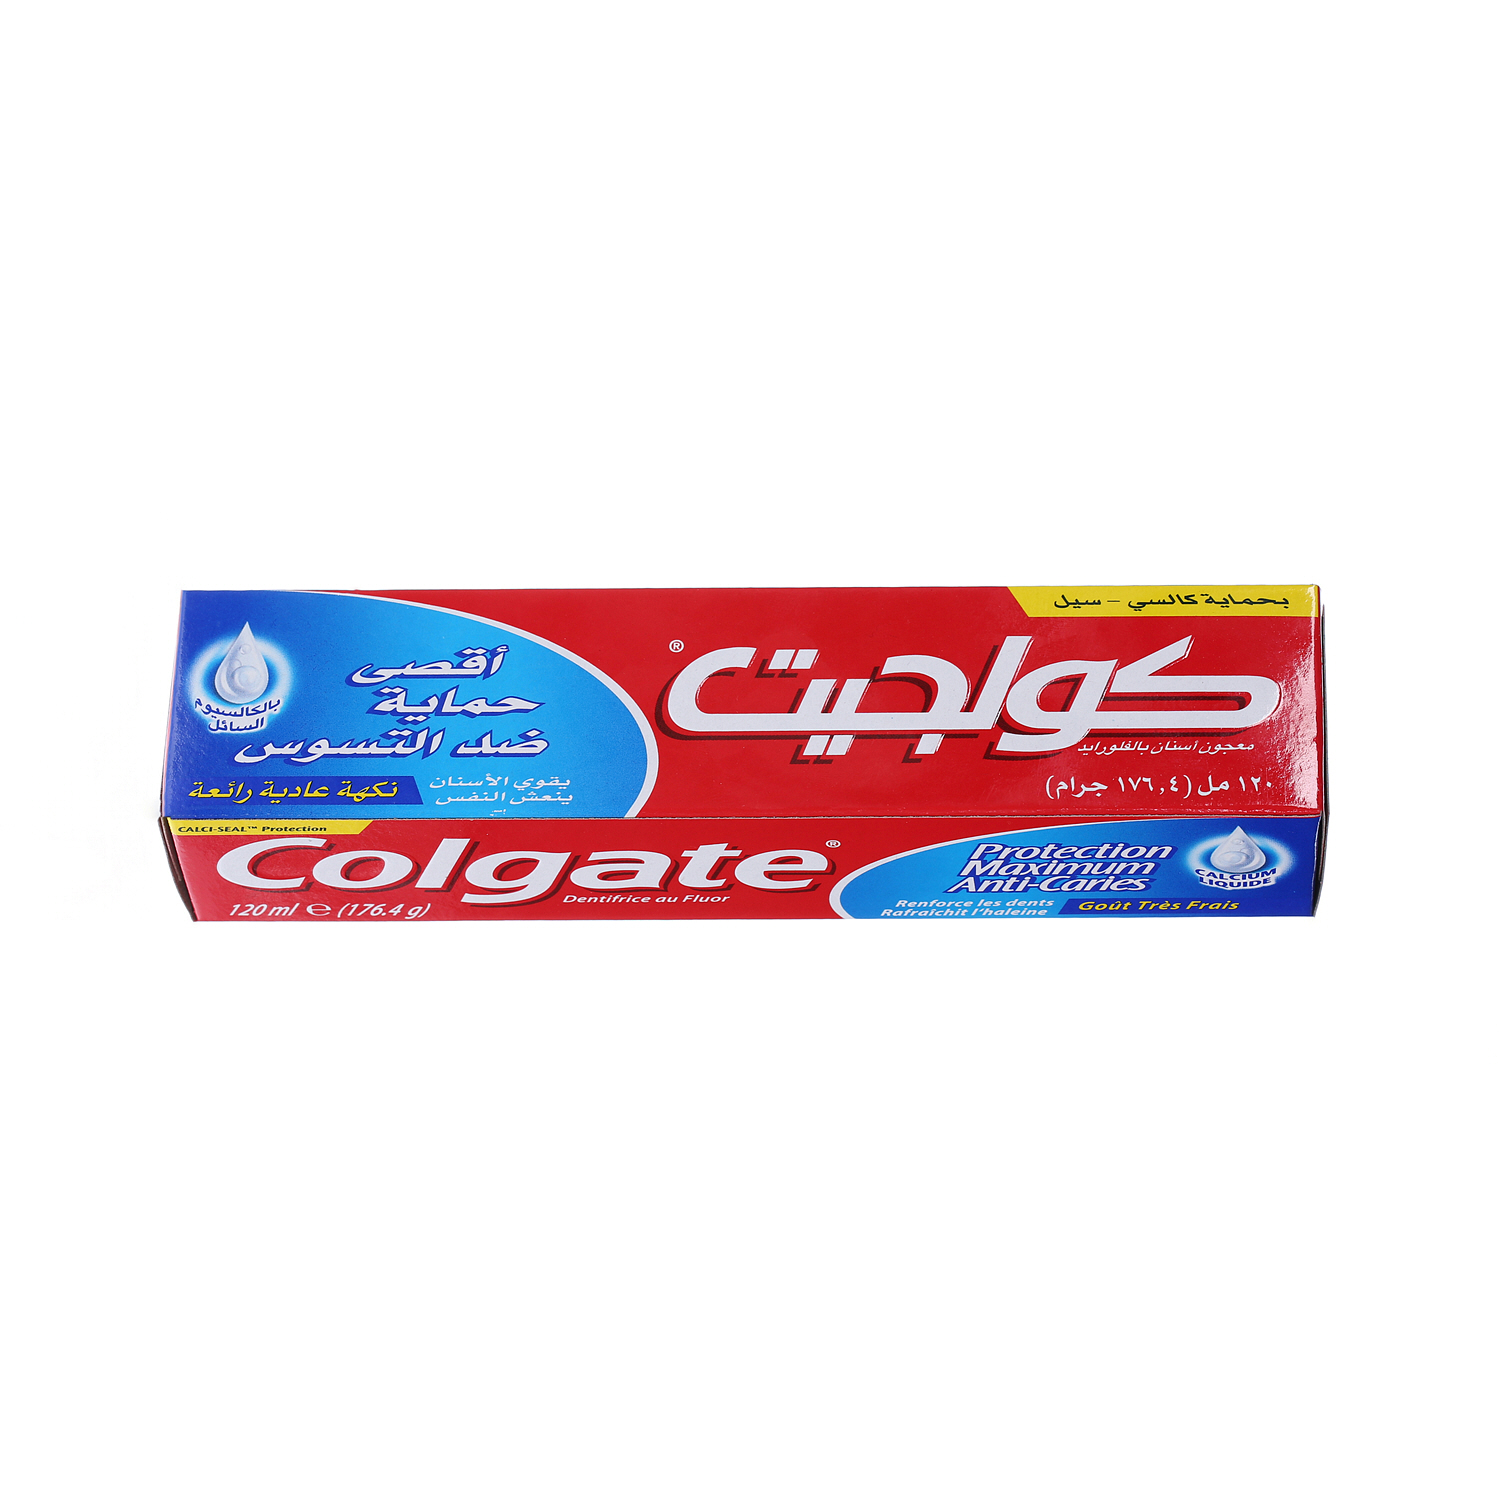 Colgate Toothpaste Regular 120ml